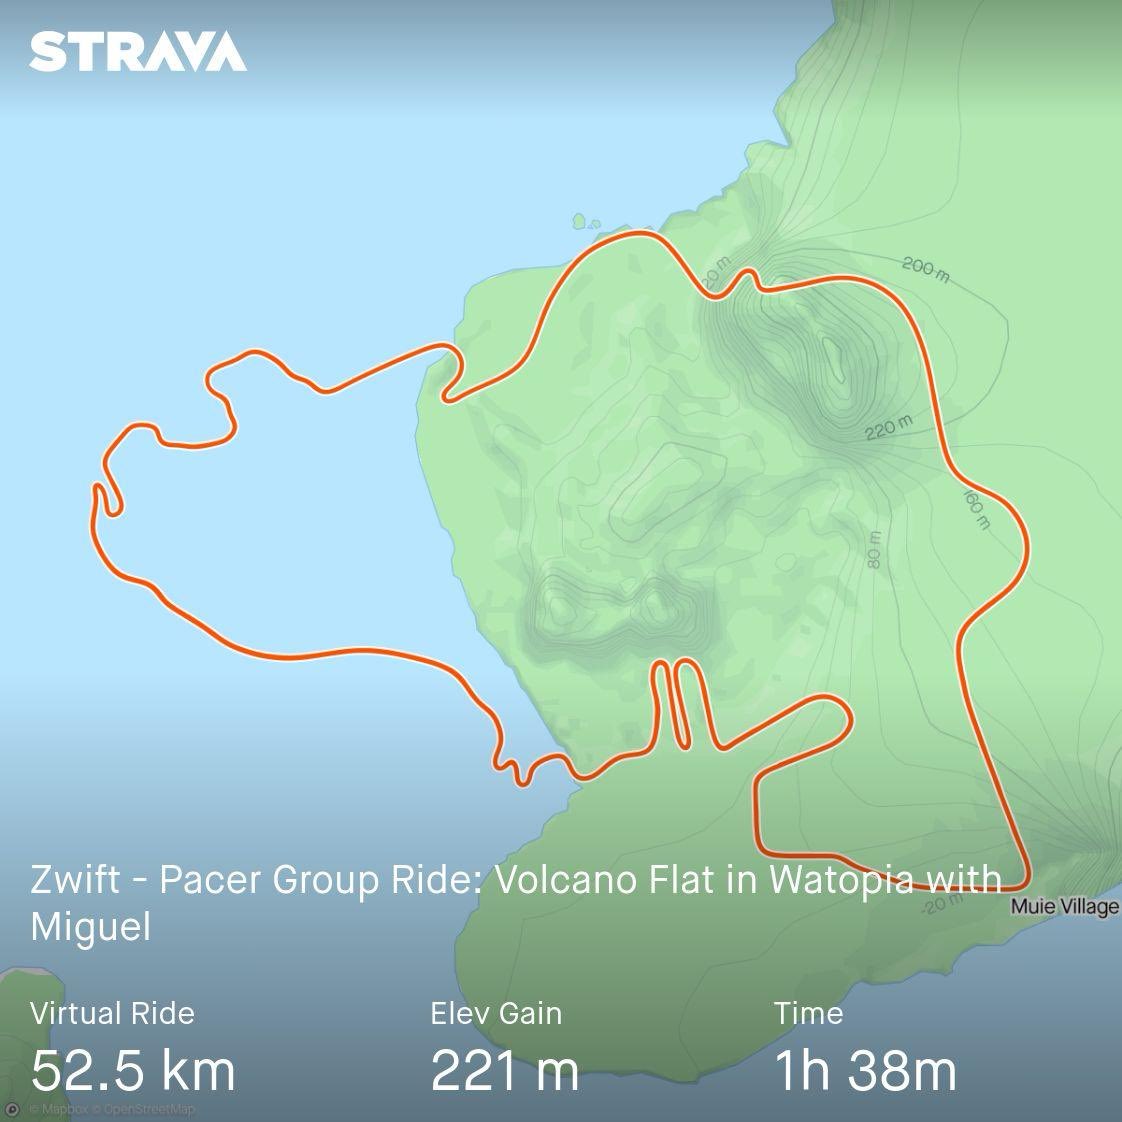 #zwift #gozwift #strava #wahoo #kickr #garmin #beatyesterday #strava #wahooligan #cycling

Check out my activity on Strava.
strava.app.link/7svPzO7ccJb